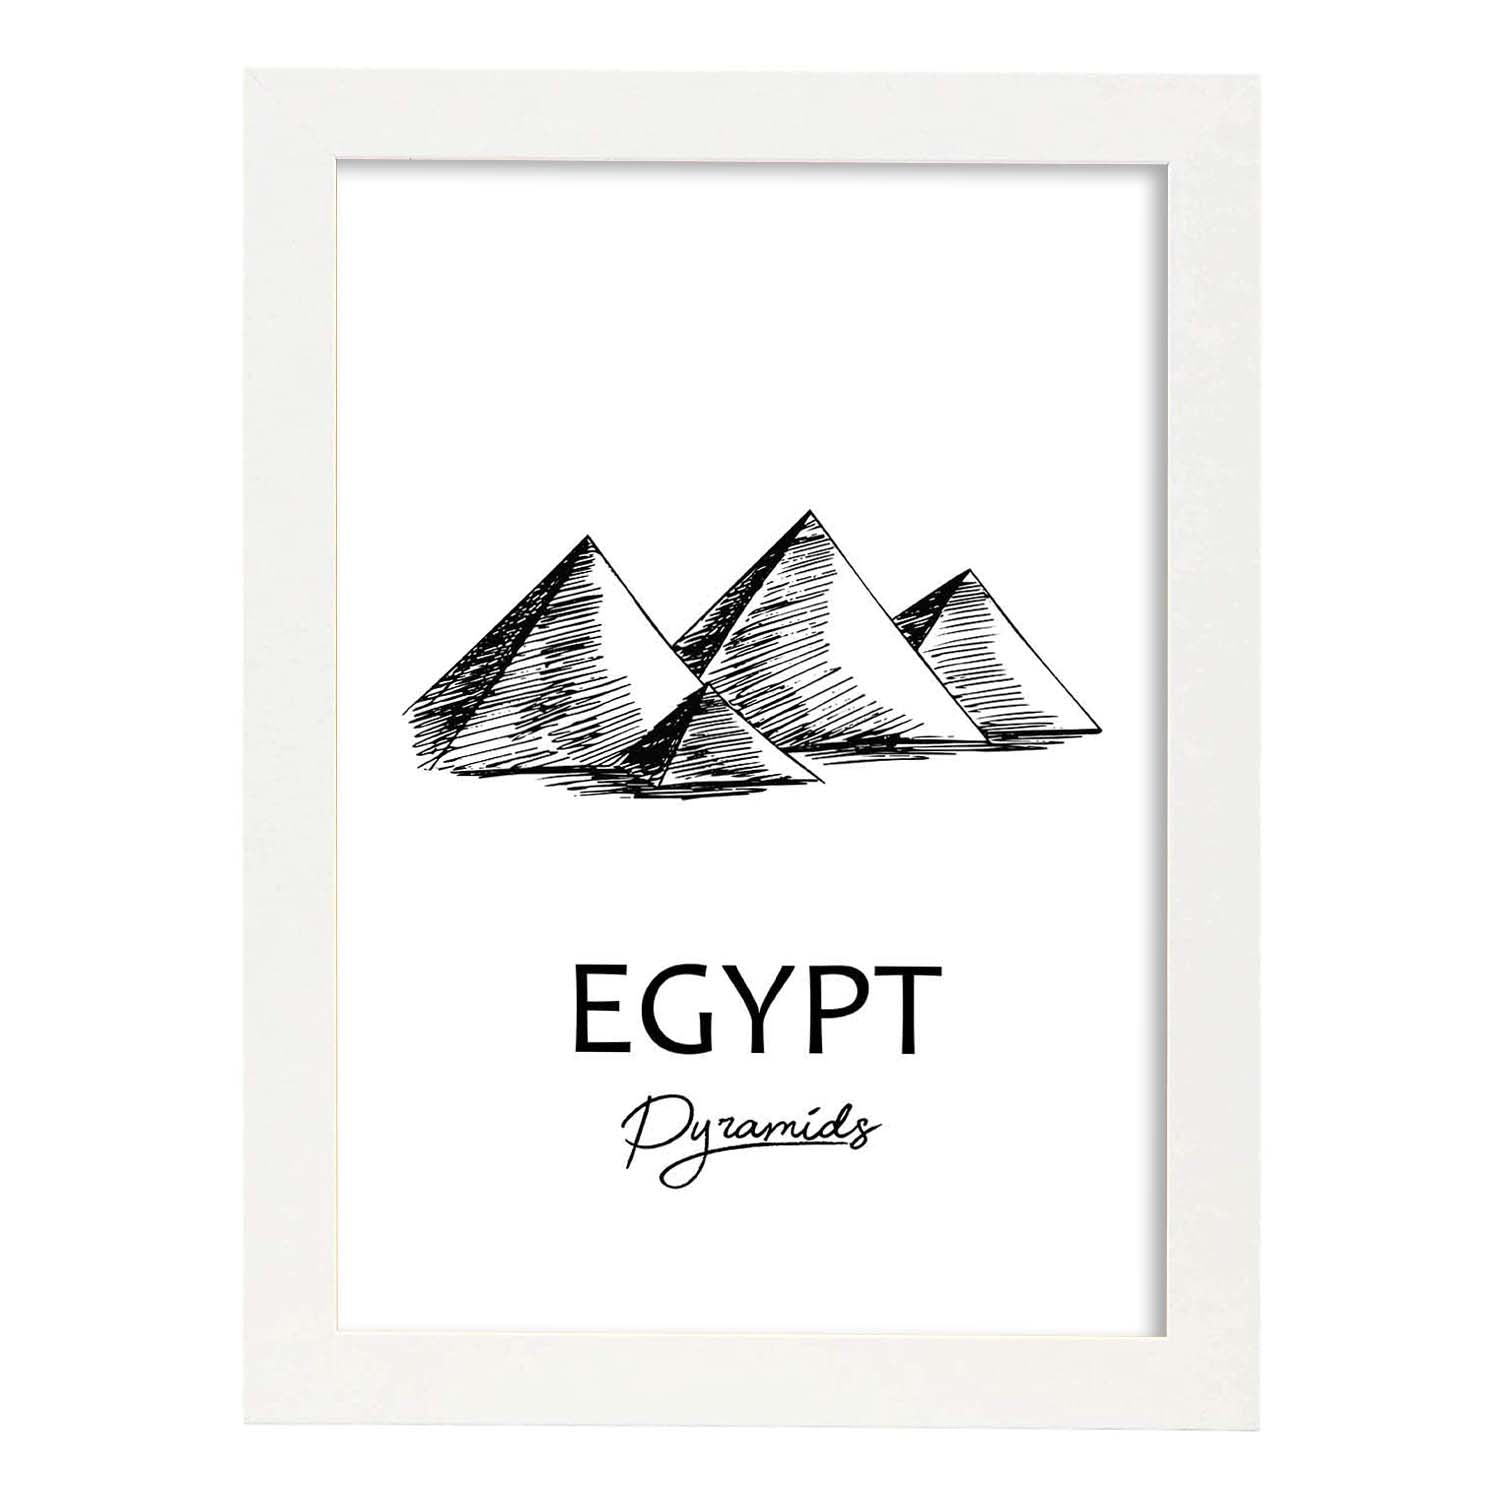 Poster de Egipto - Pirámides. Láminas con monumentos de ciudades.-Artwork-Nacnic-A4-Marco Blanco-Nacnic Estudio SL